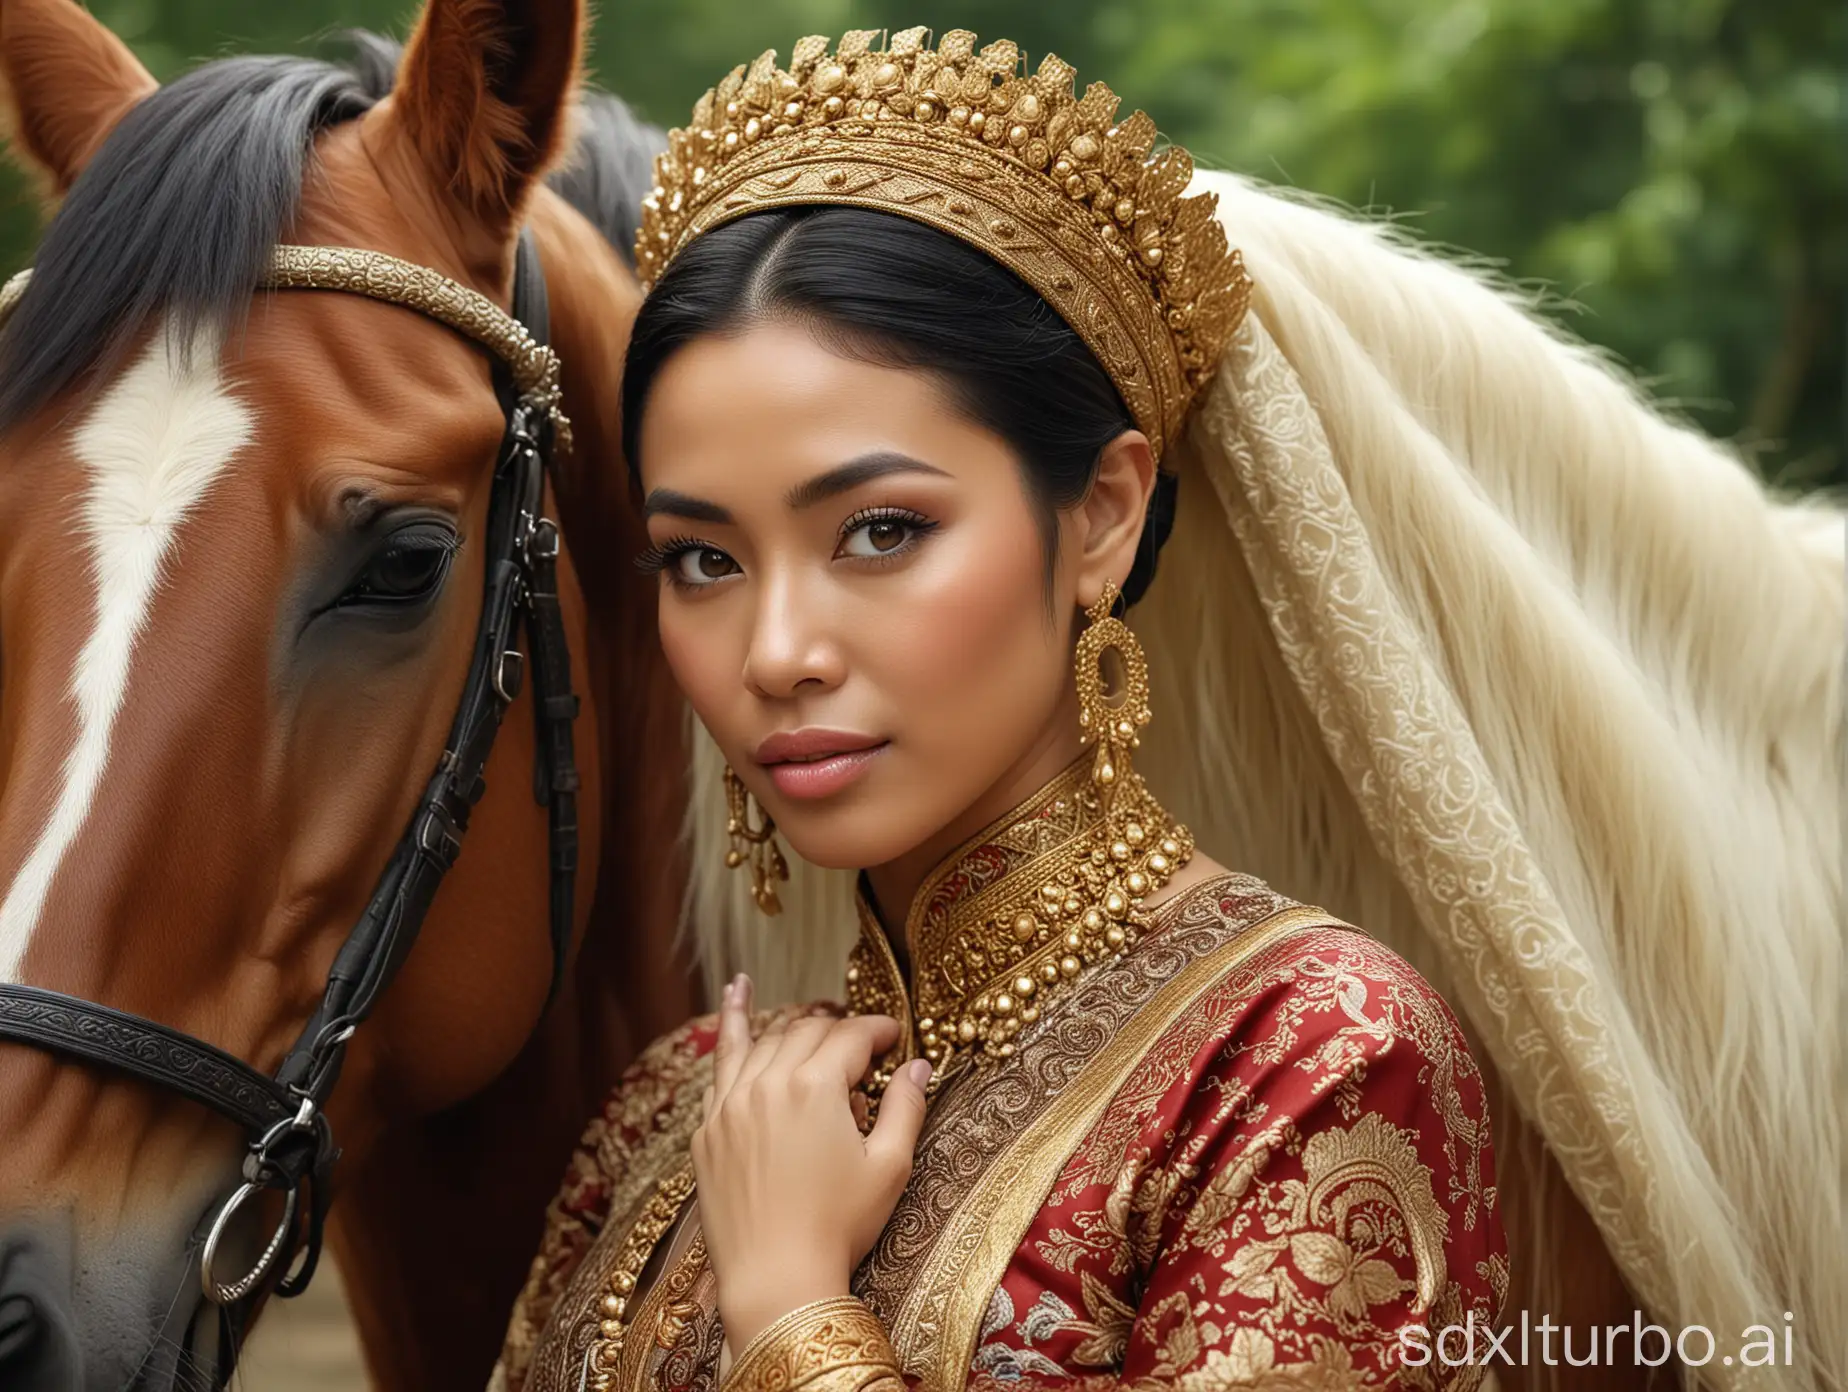 Hyperrealistic-Portrait-of-Ancient-Javanese-Woman-Embracing-Horse